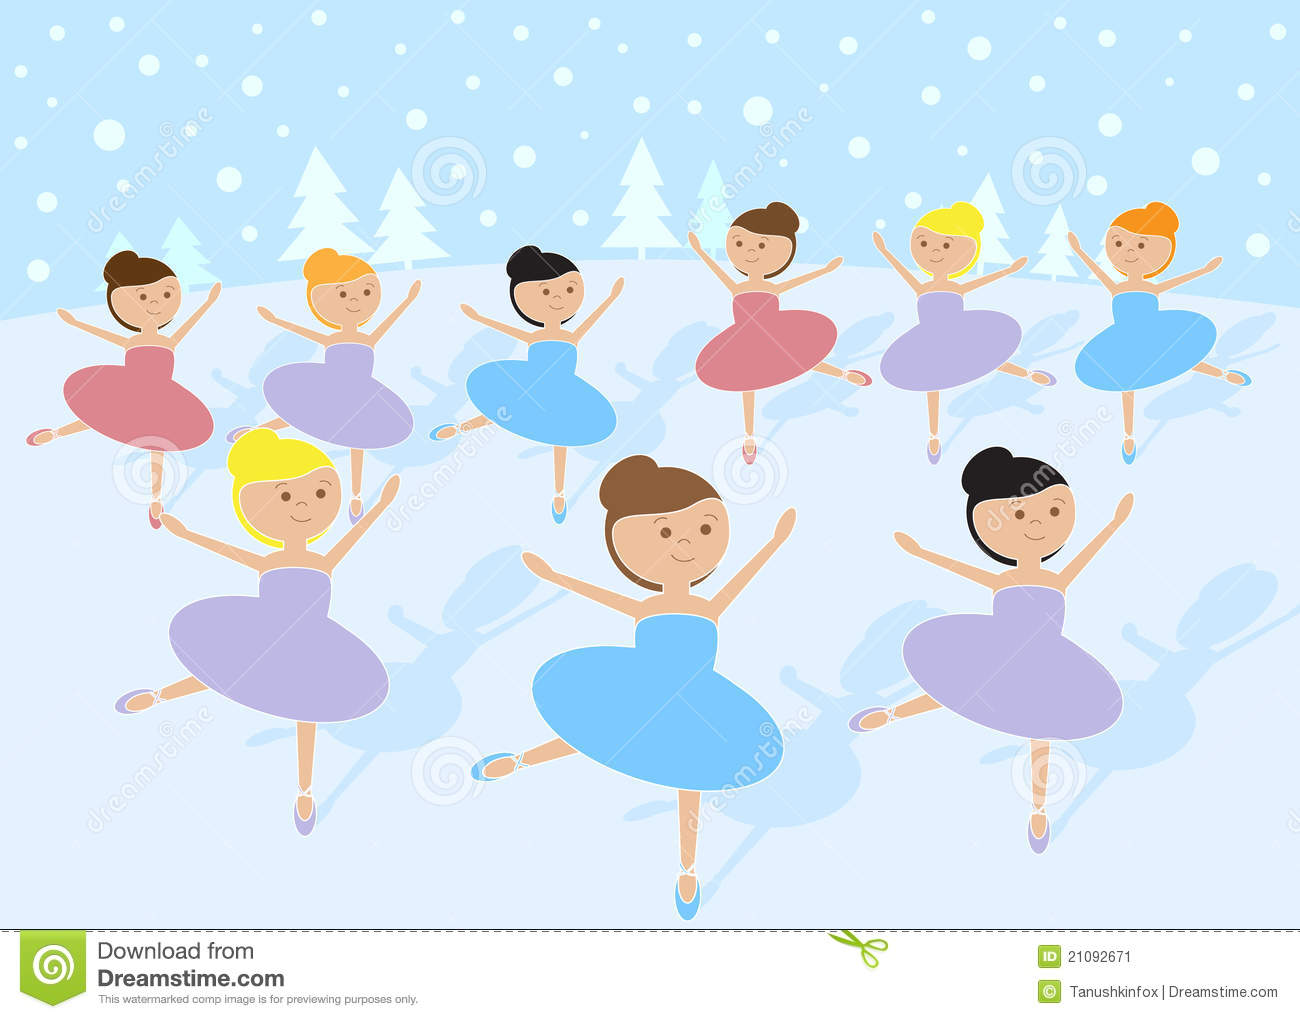 Stock Image  12 Days Of Christmas  9 Ladies Dancing